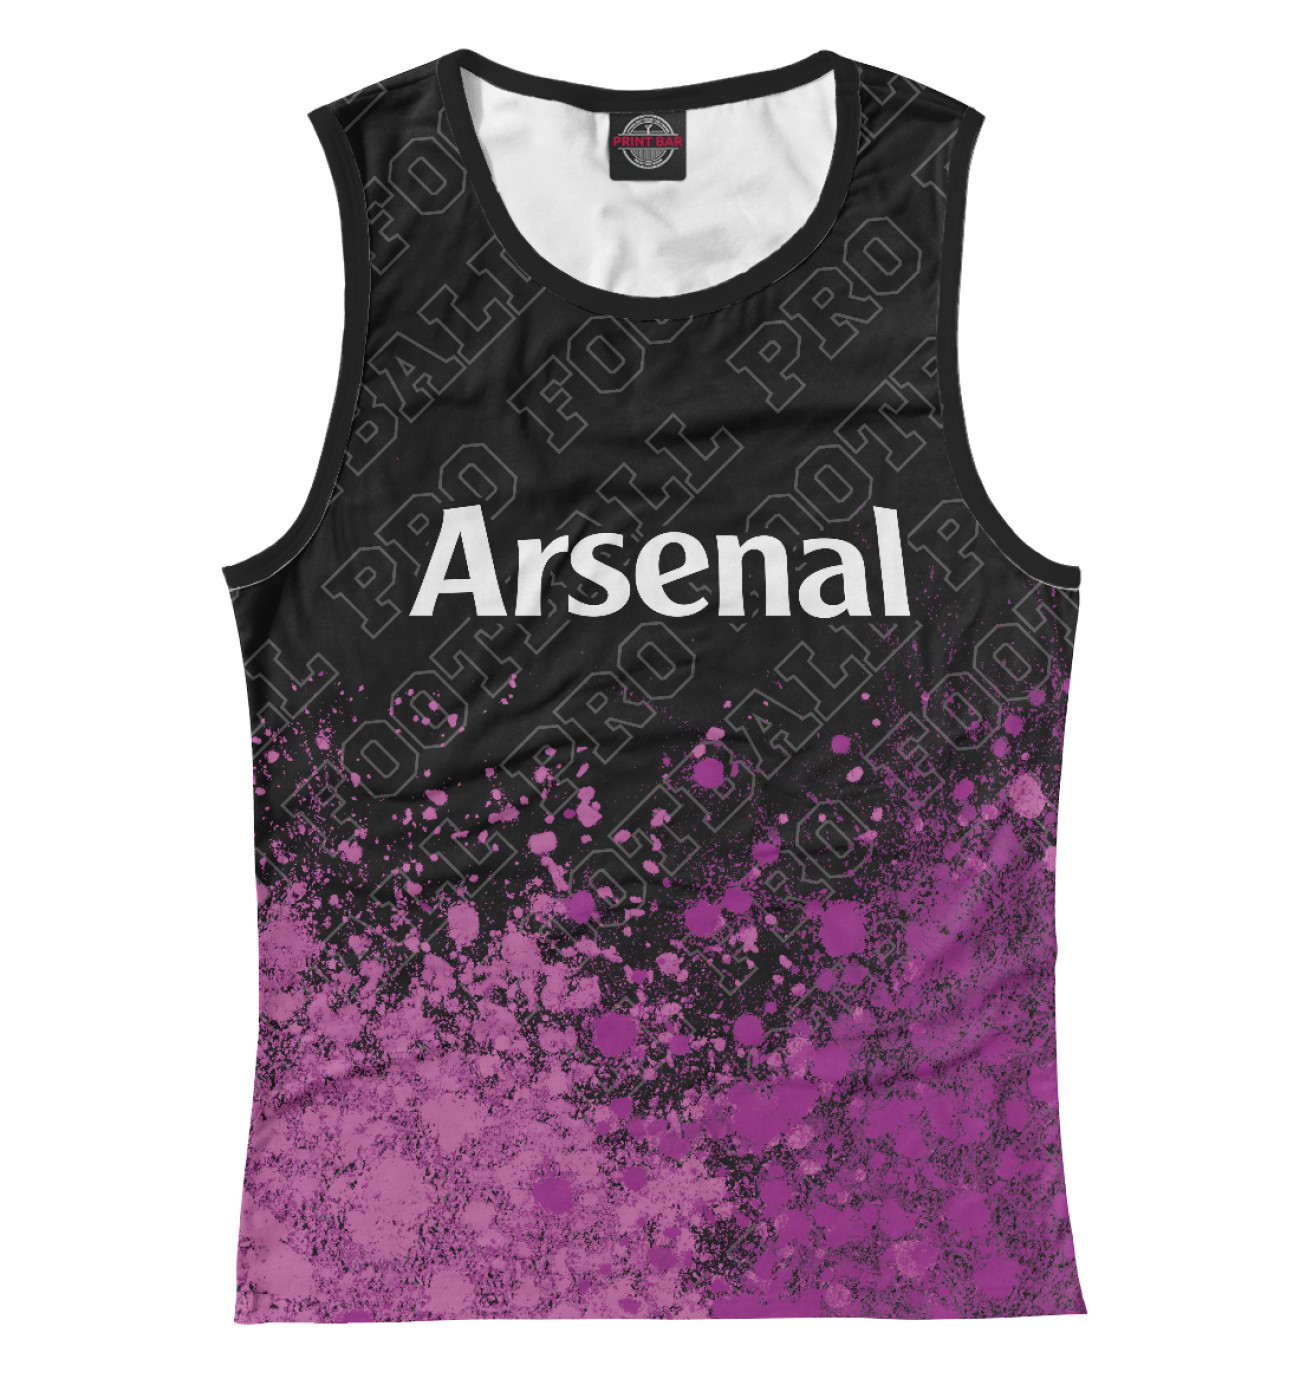 Женская Майка Arsenal Pro Football (color splash), артикул: ARS-755668-may-1